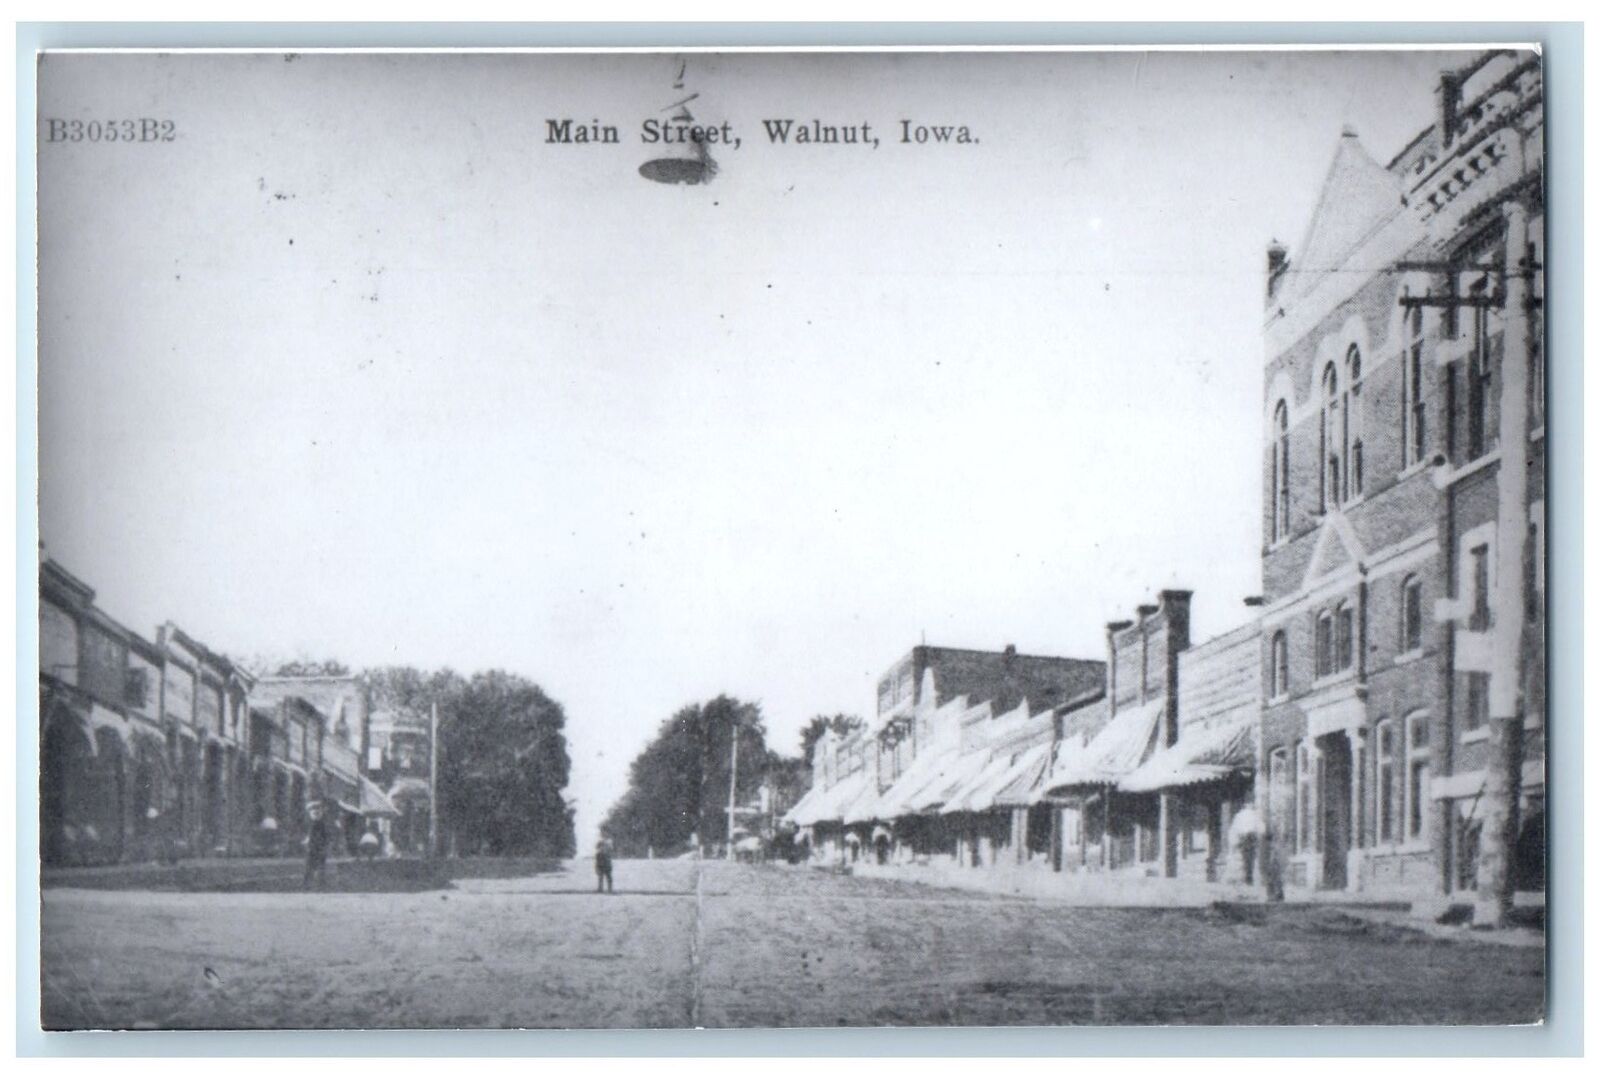 c1910 Main Street Wide Dirt Road Business District Walnut Iowa Antique Postcard